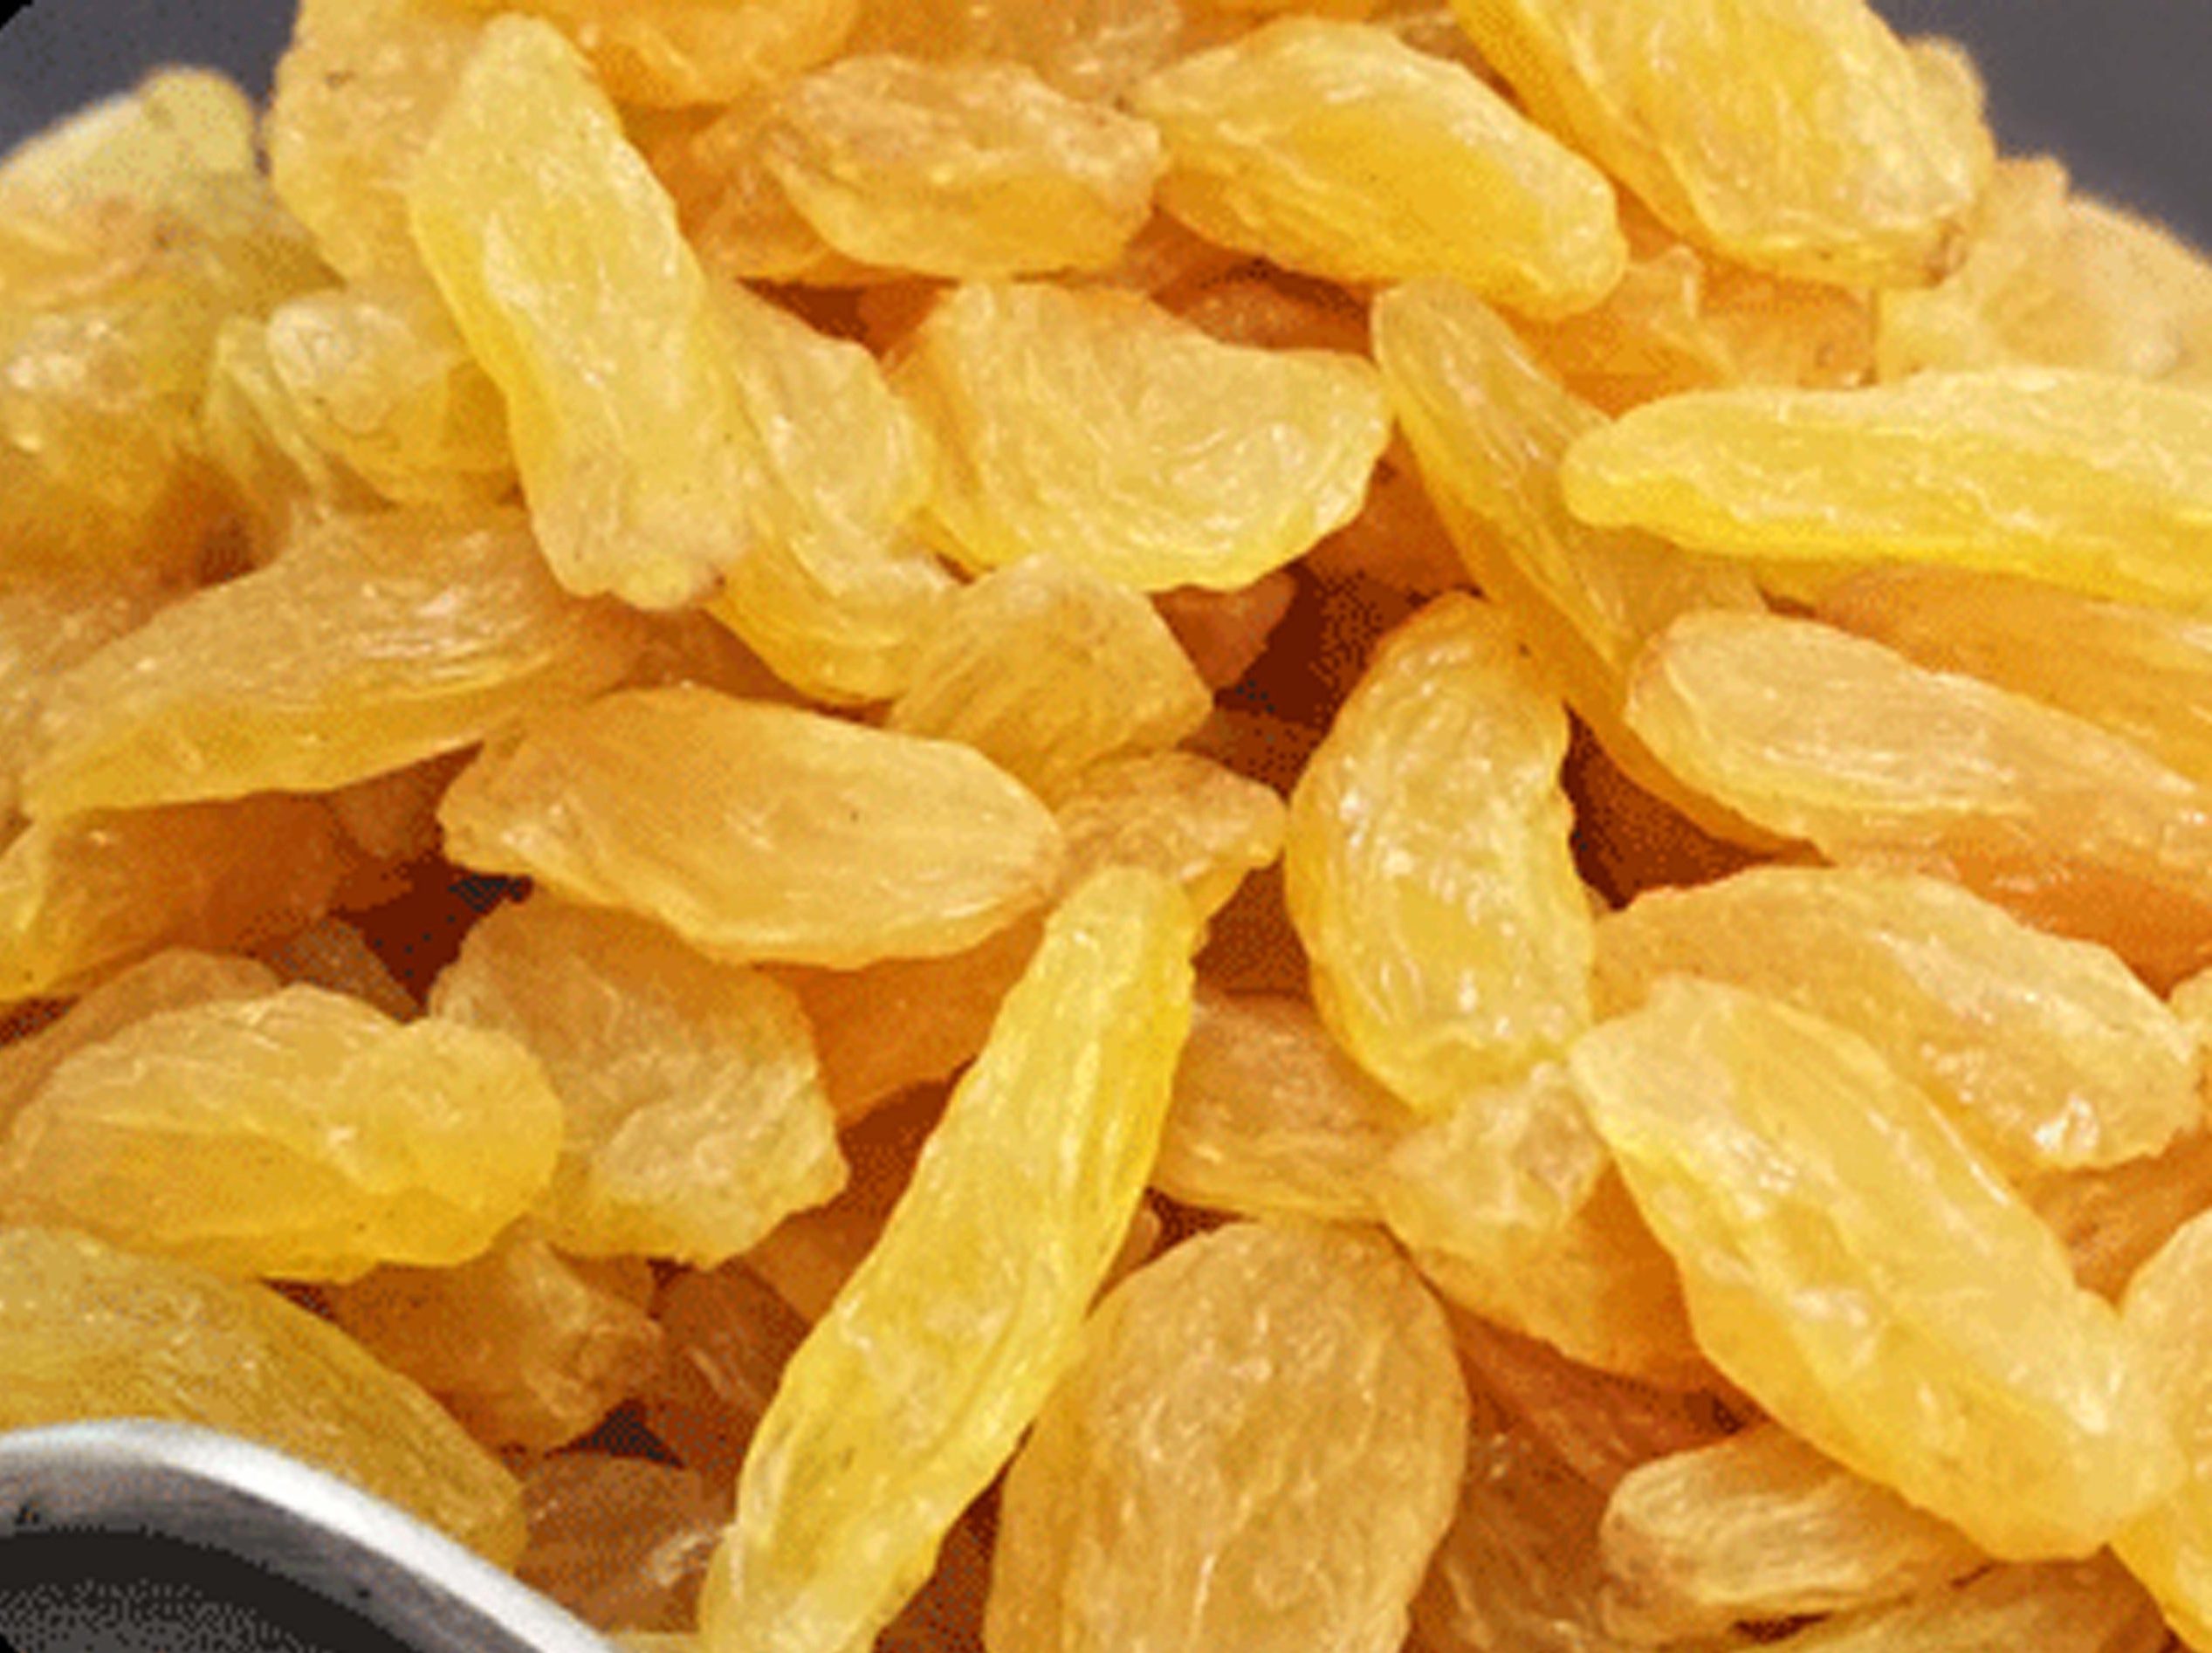 Buy Nutex Organic Golden Raisins - Buy & Price Best Organic Kashmari Golden Raisins - Nutex Dried Fruits